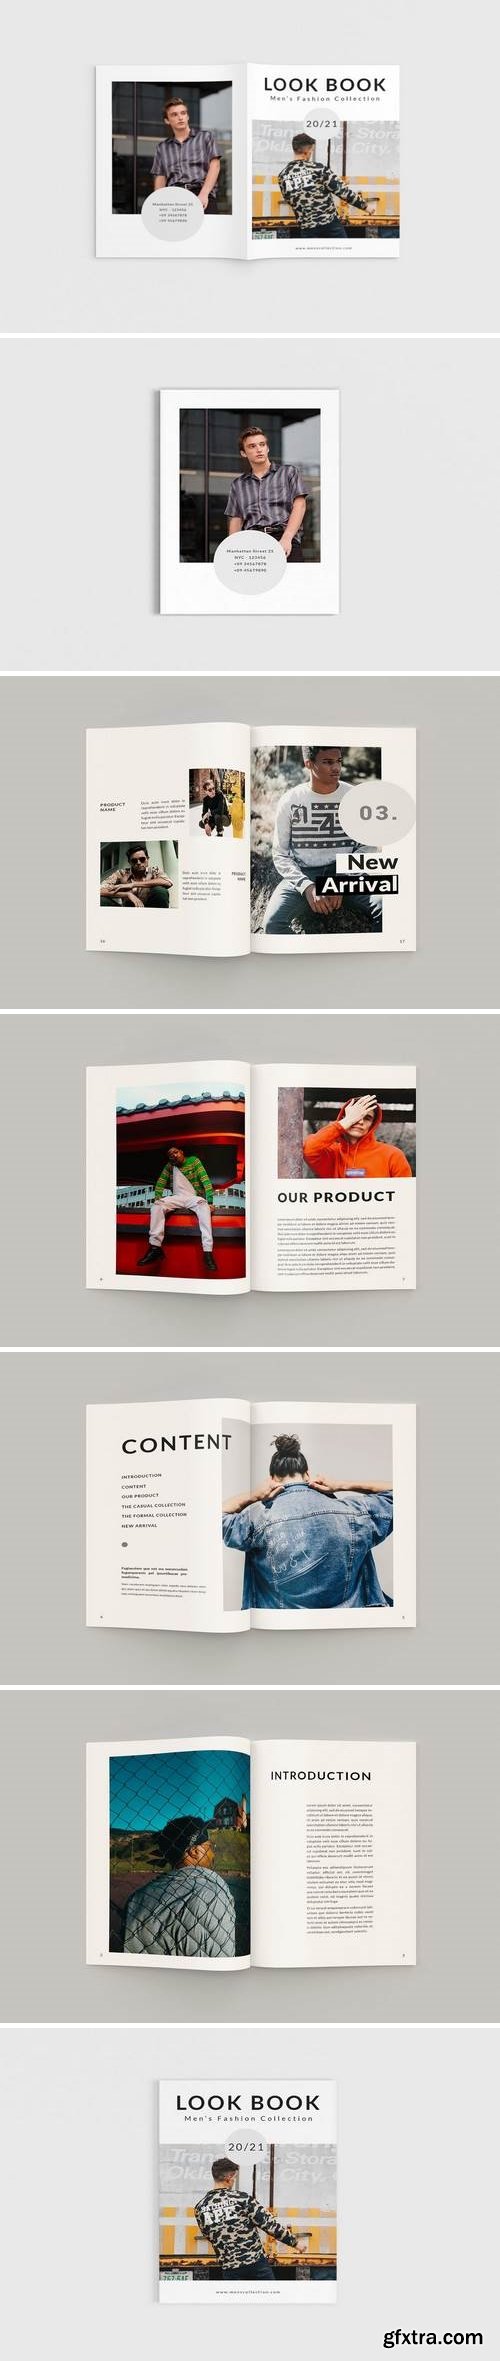 Freshlook - A4 Fashion Lookbook Brochure Template